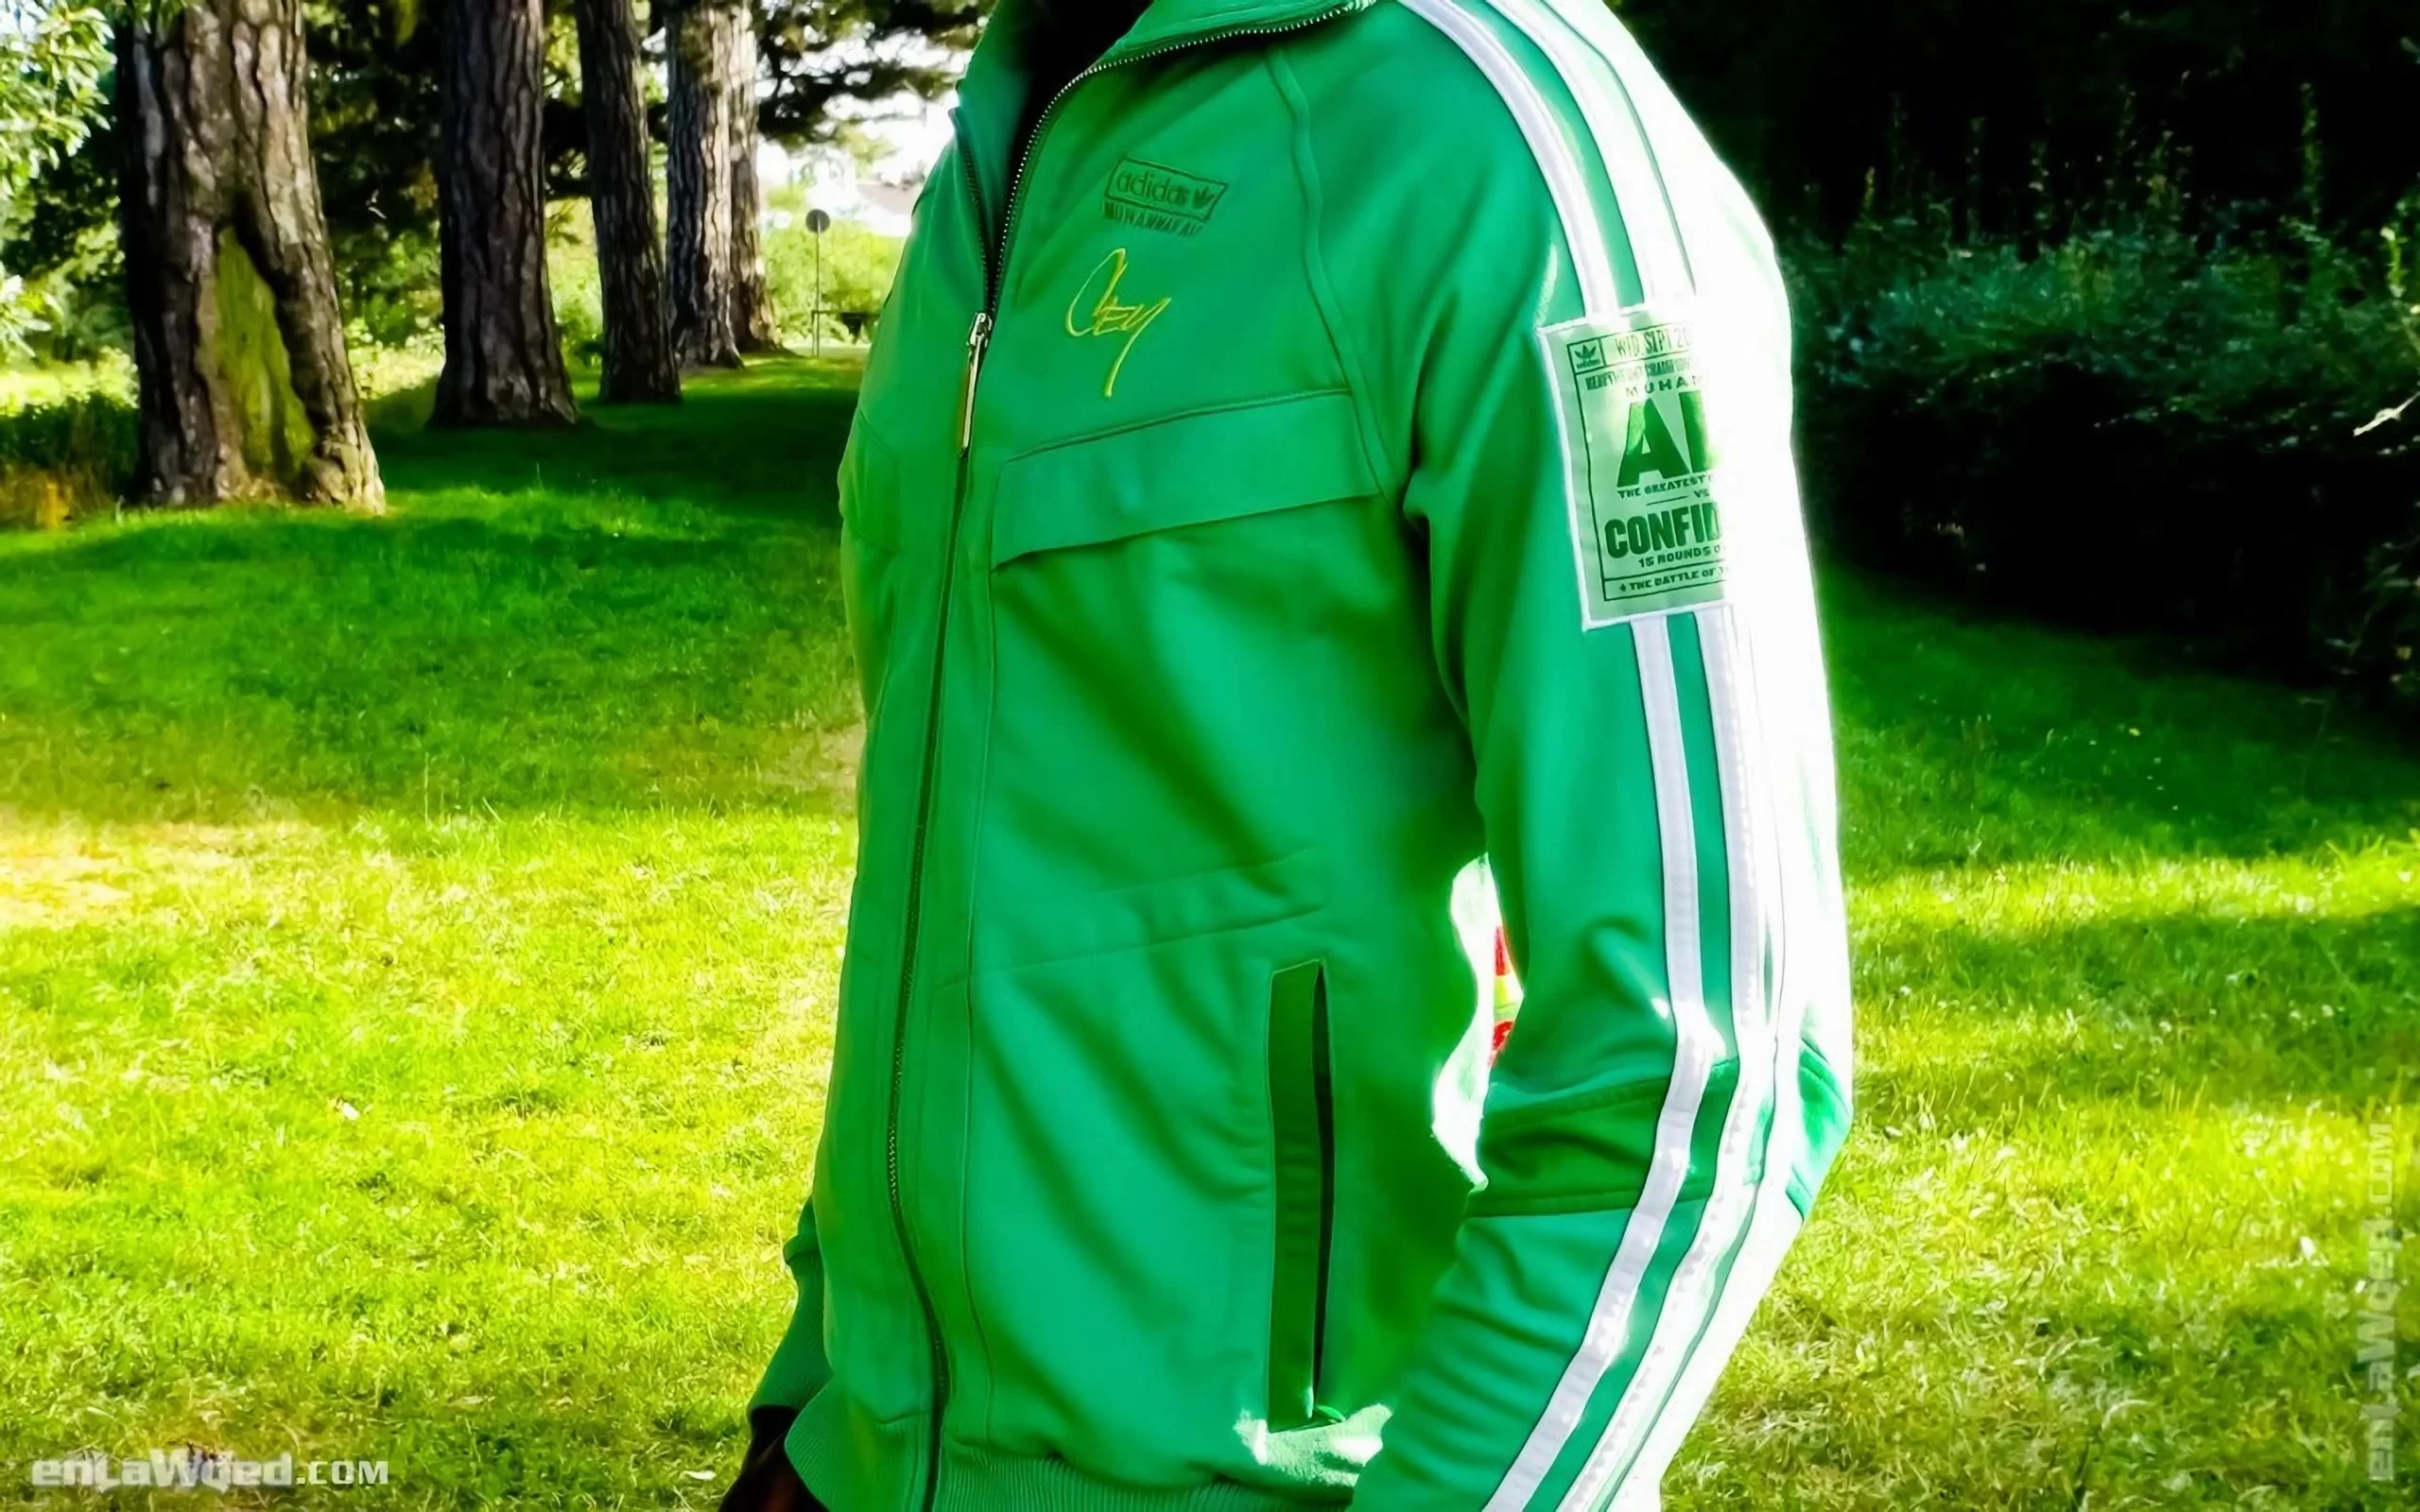 Men’s 2007 Muhammad Ali Confidence TT by Adidas: Launching (EnLawded.com file #lmc4rcu28l5rfe9jhhb)